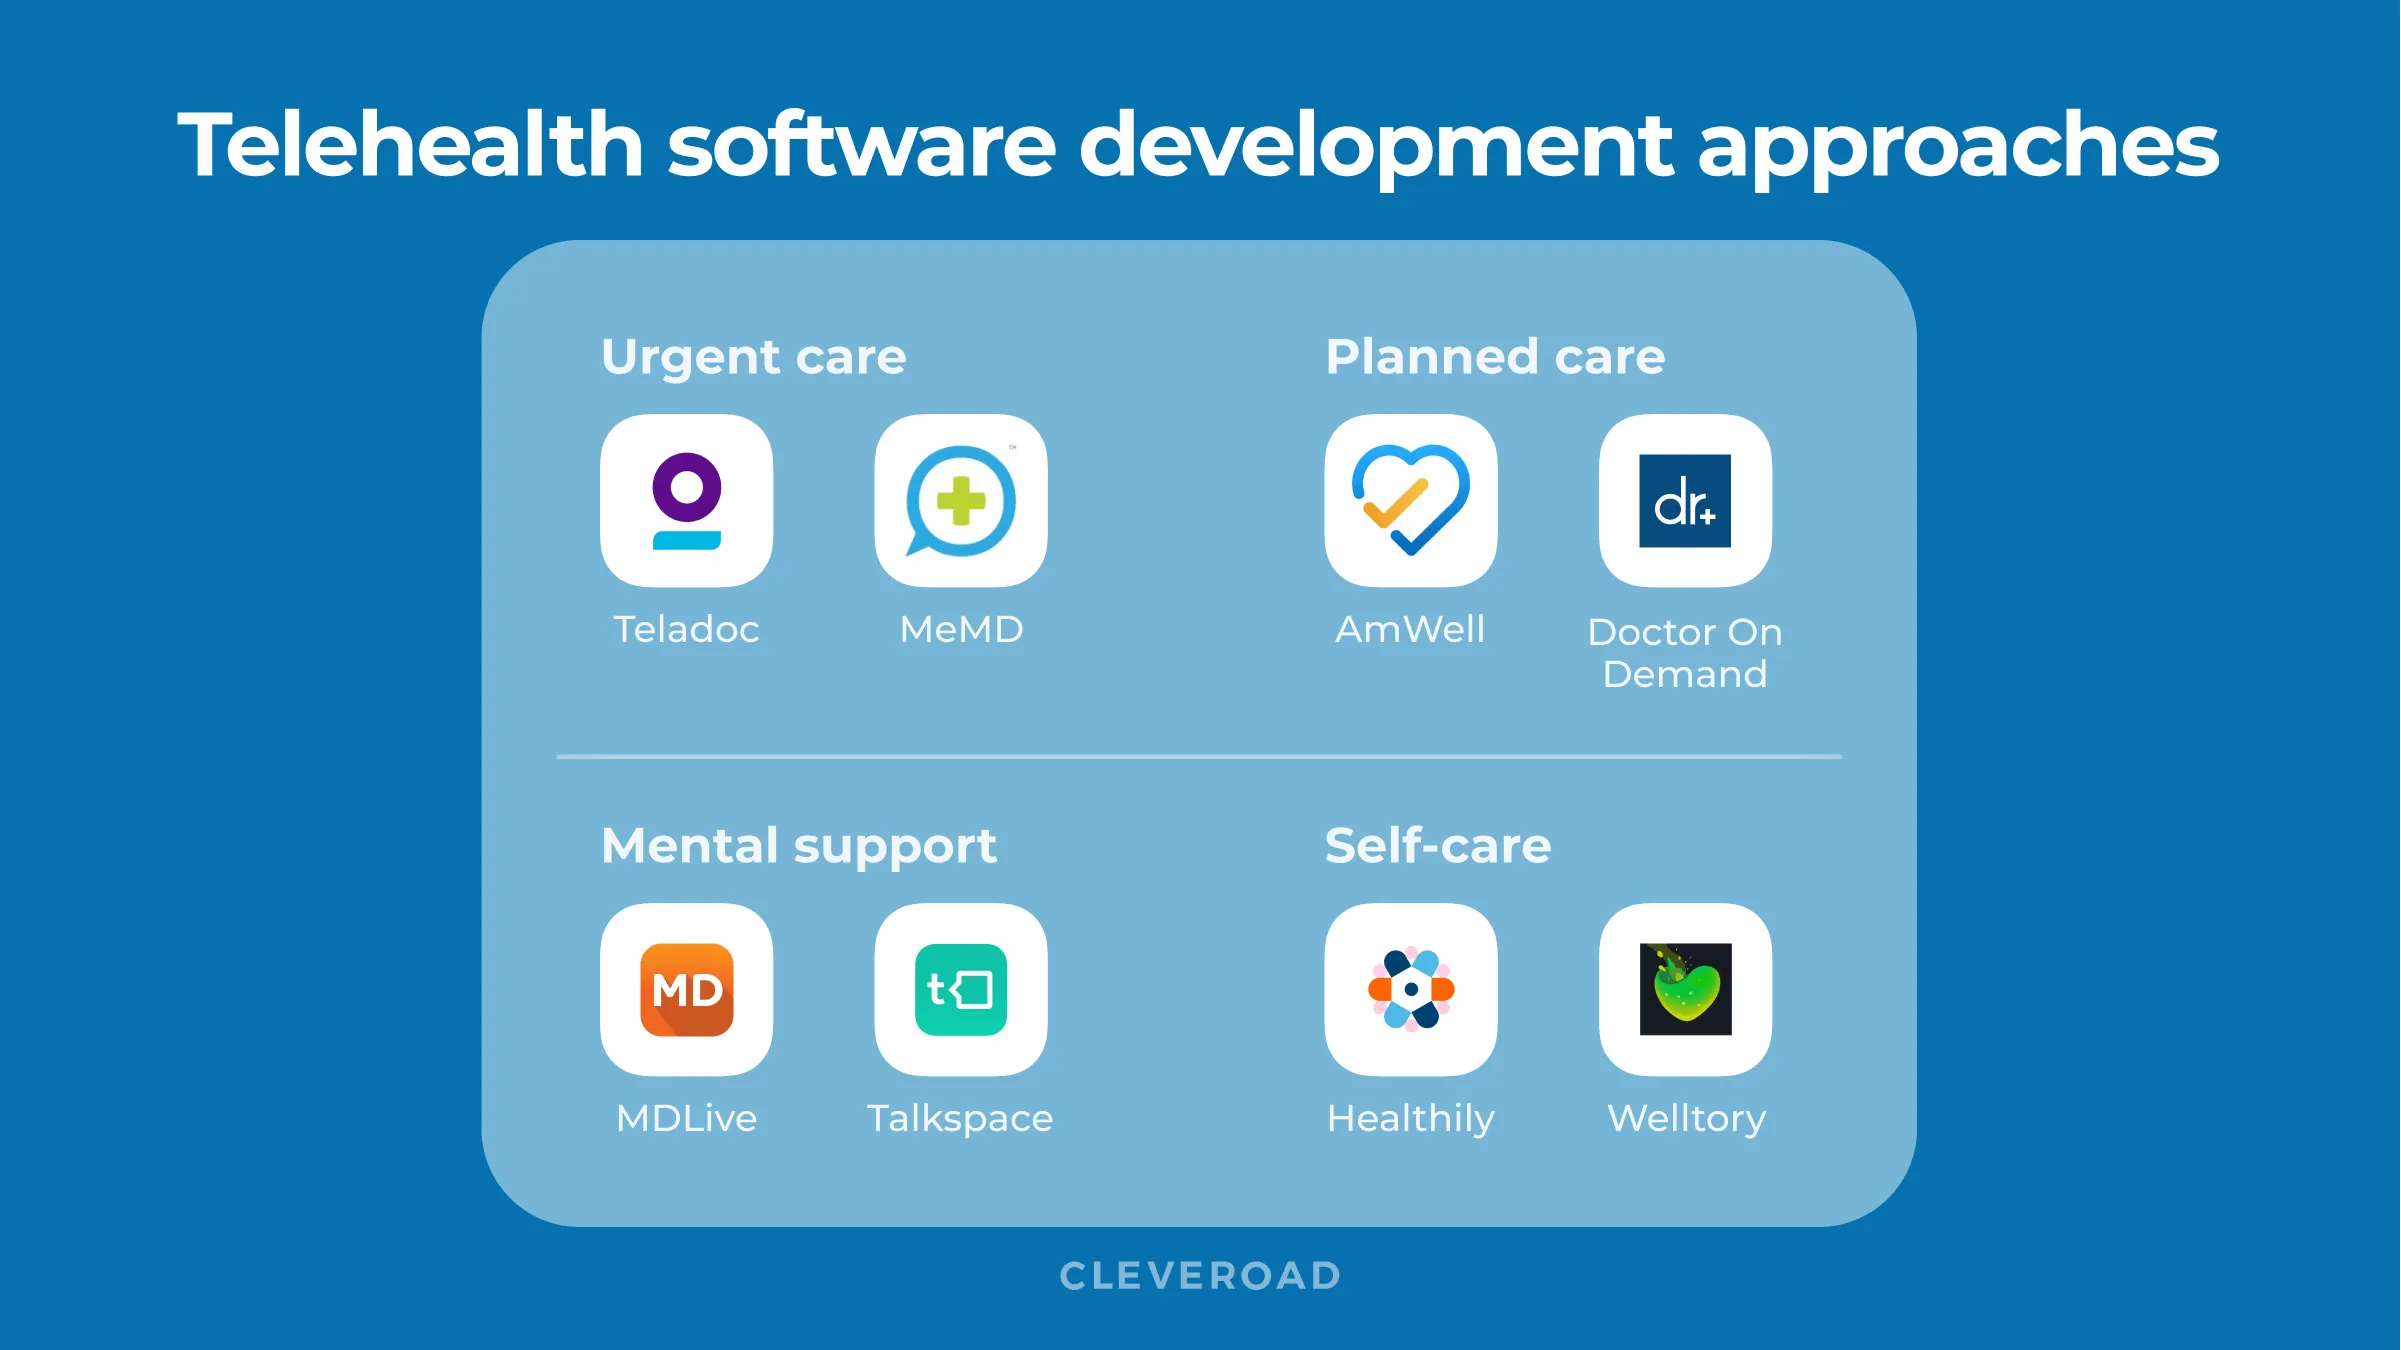 Telehealth software development approaches